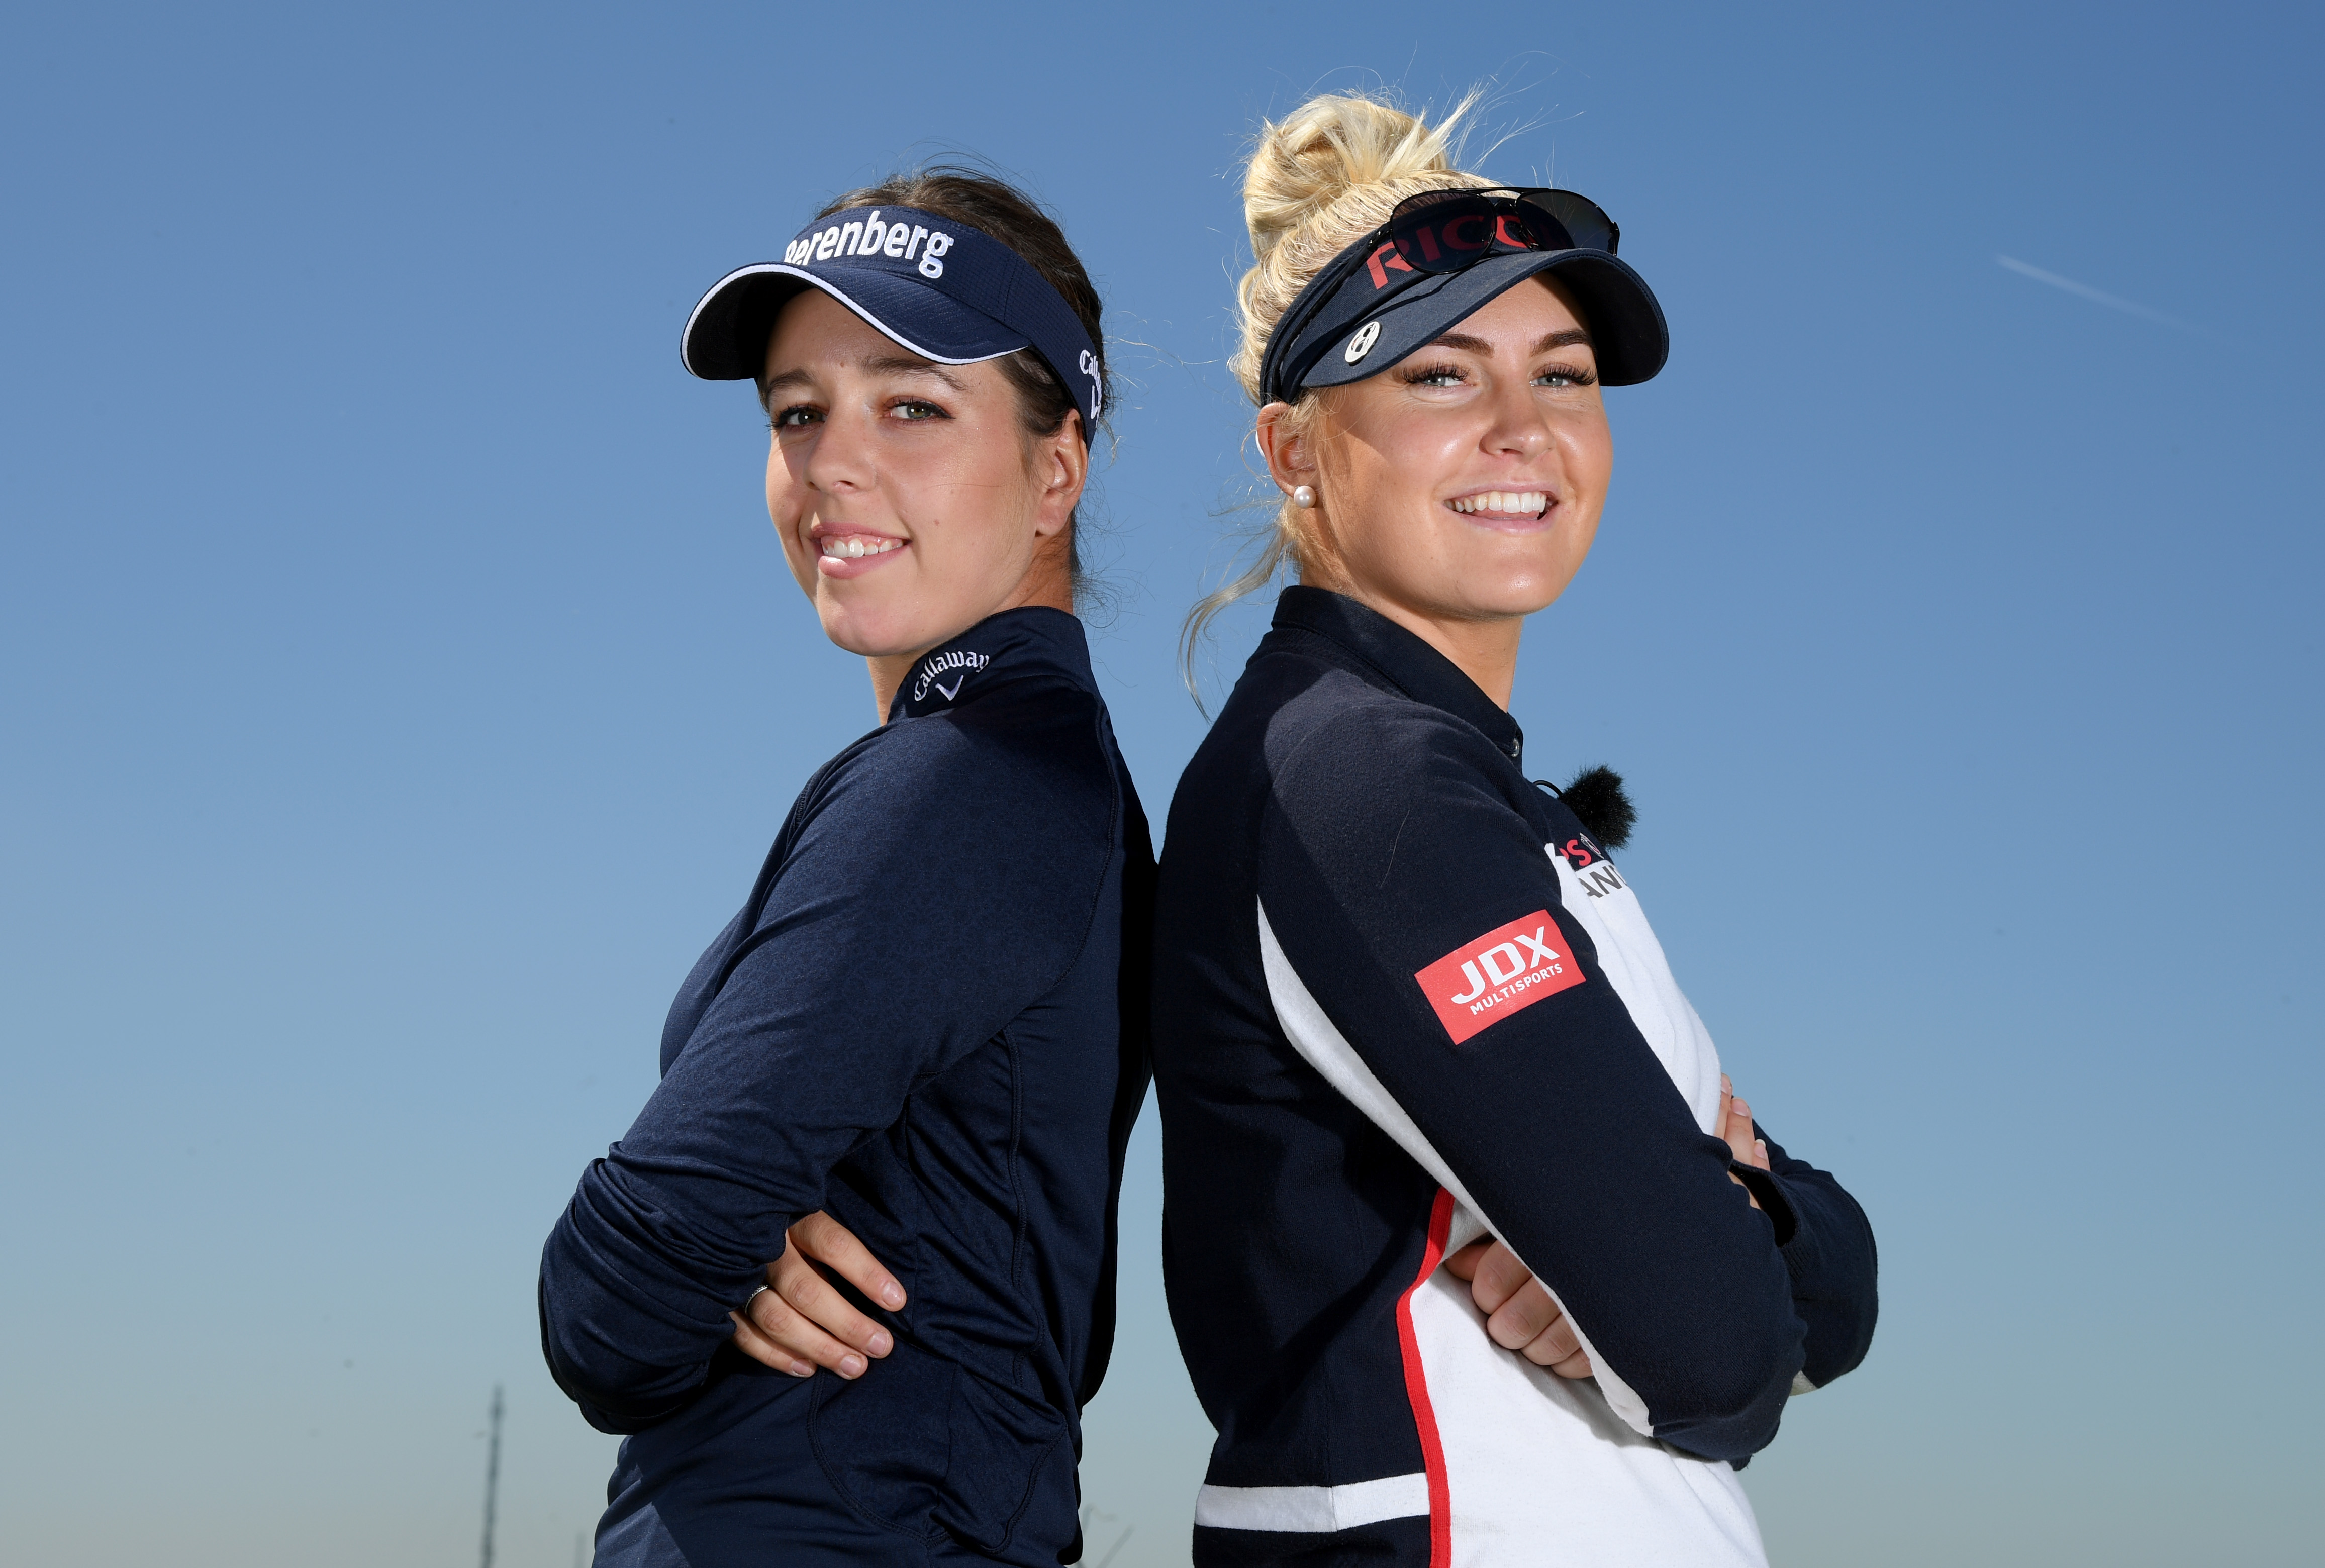 England Women and European Women advance to final day of GolfSixes